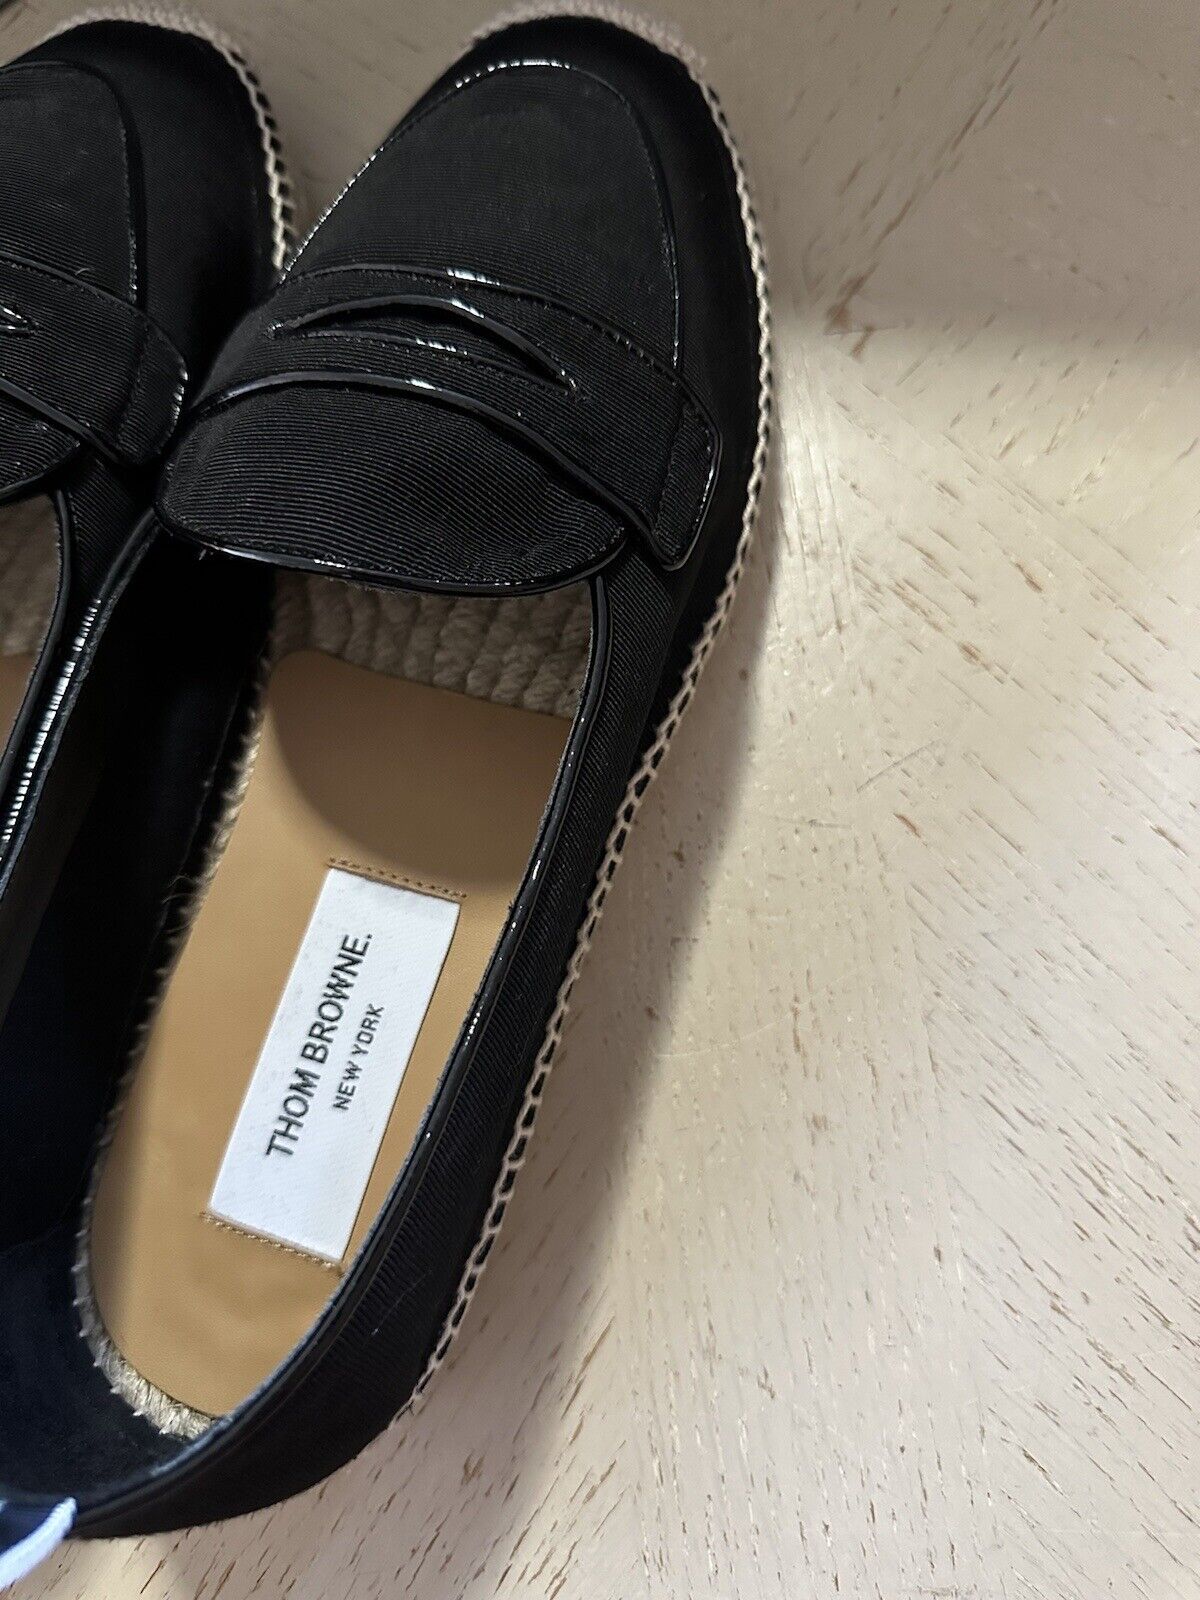 NIB Thom Browne Men Penny Espadrille Loafers Shoes Black 9 US/42 EU Spain